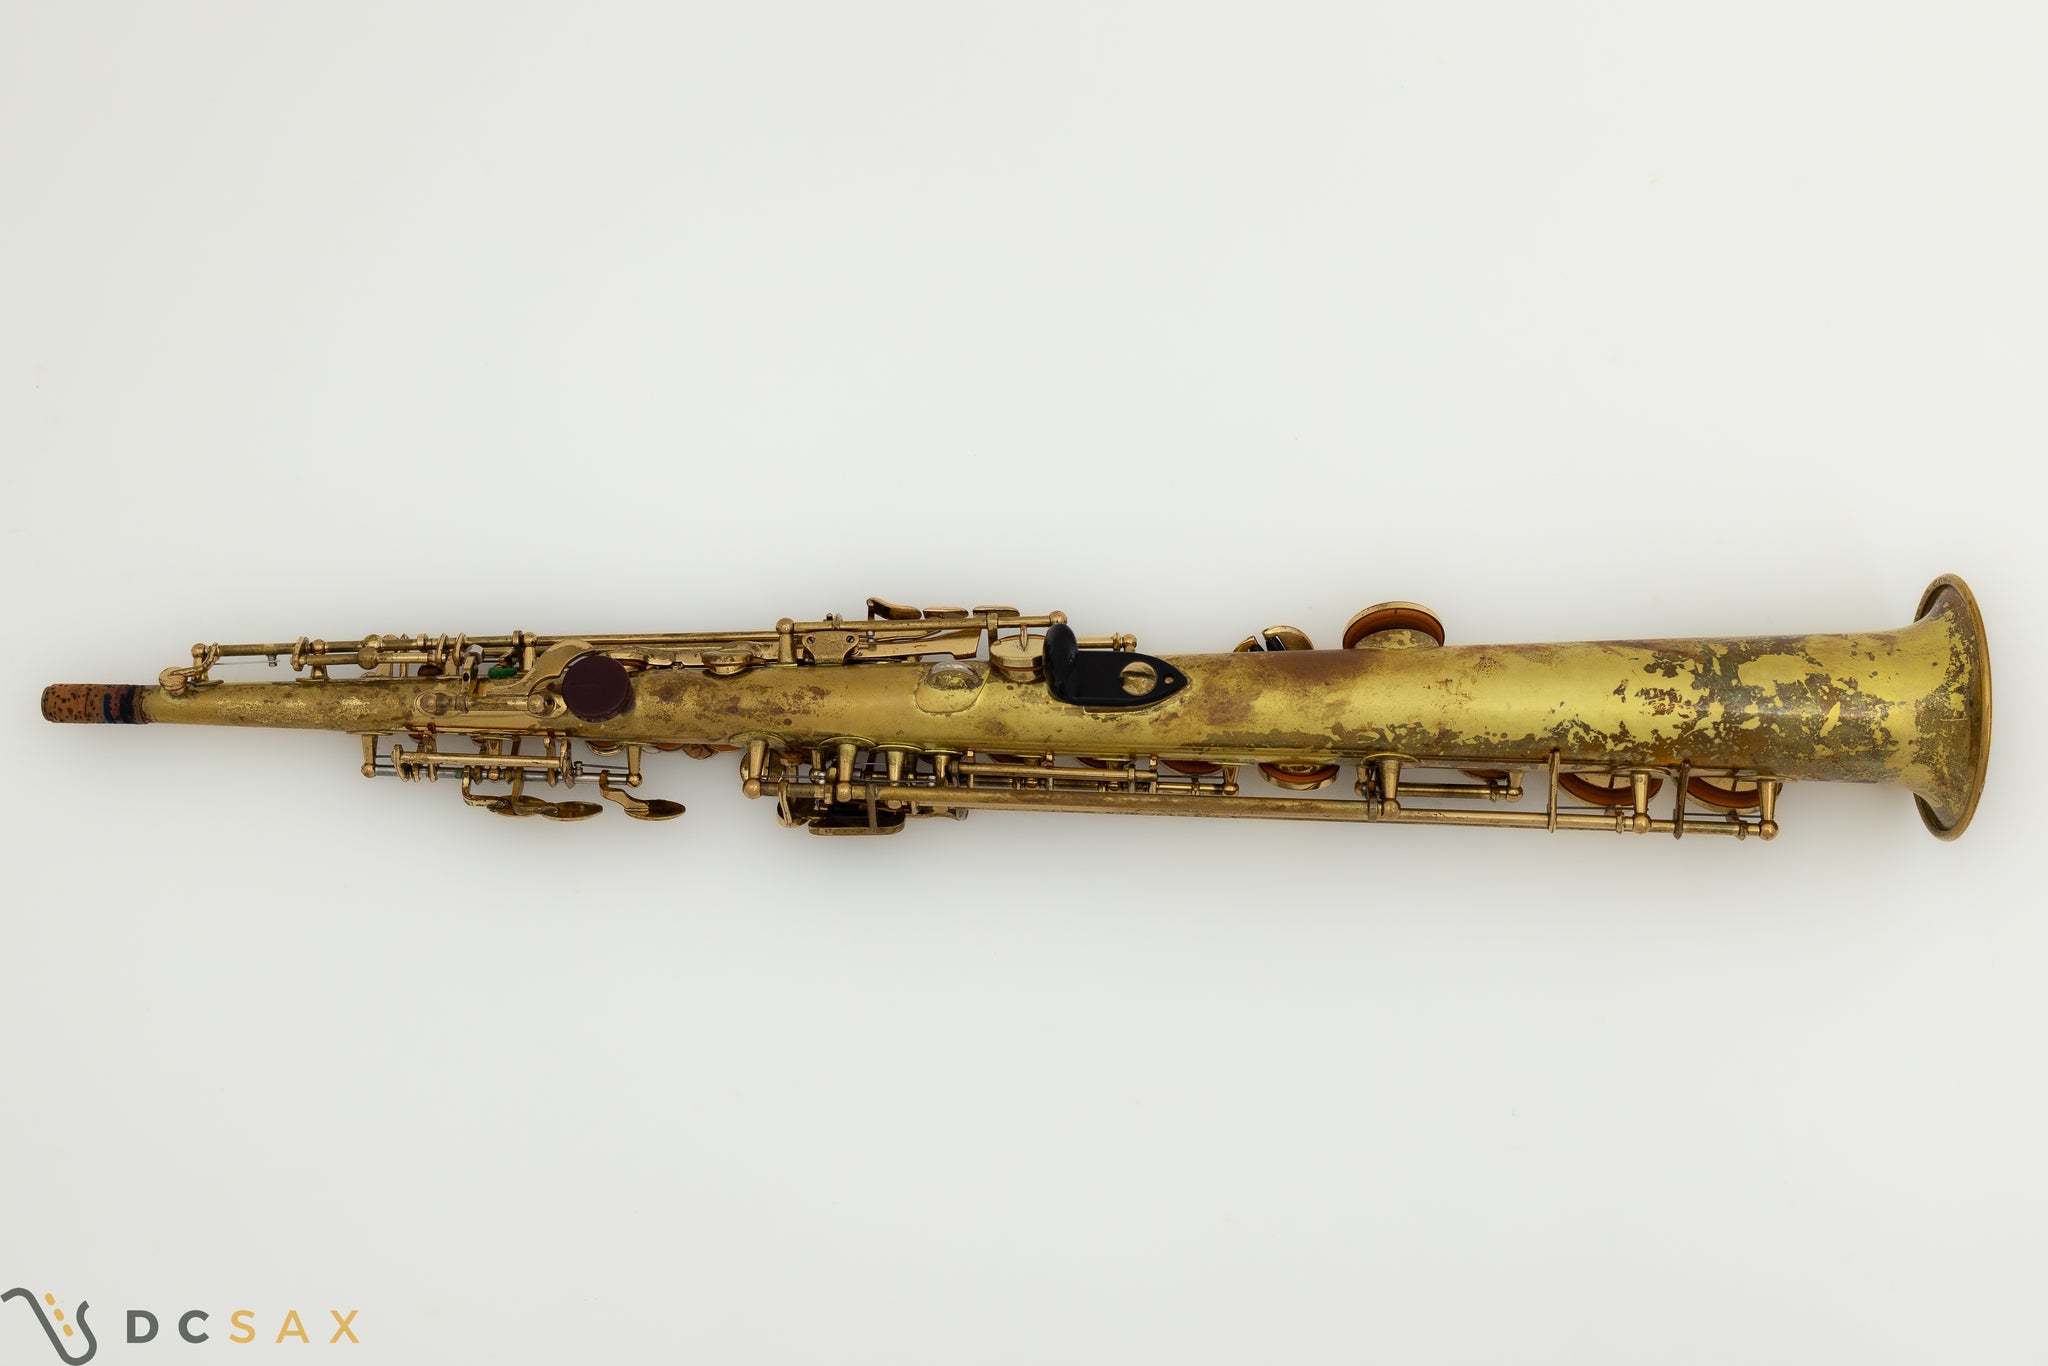 Yanagisawa S-6 Soprano Saxophone